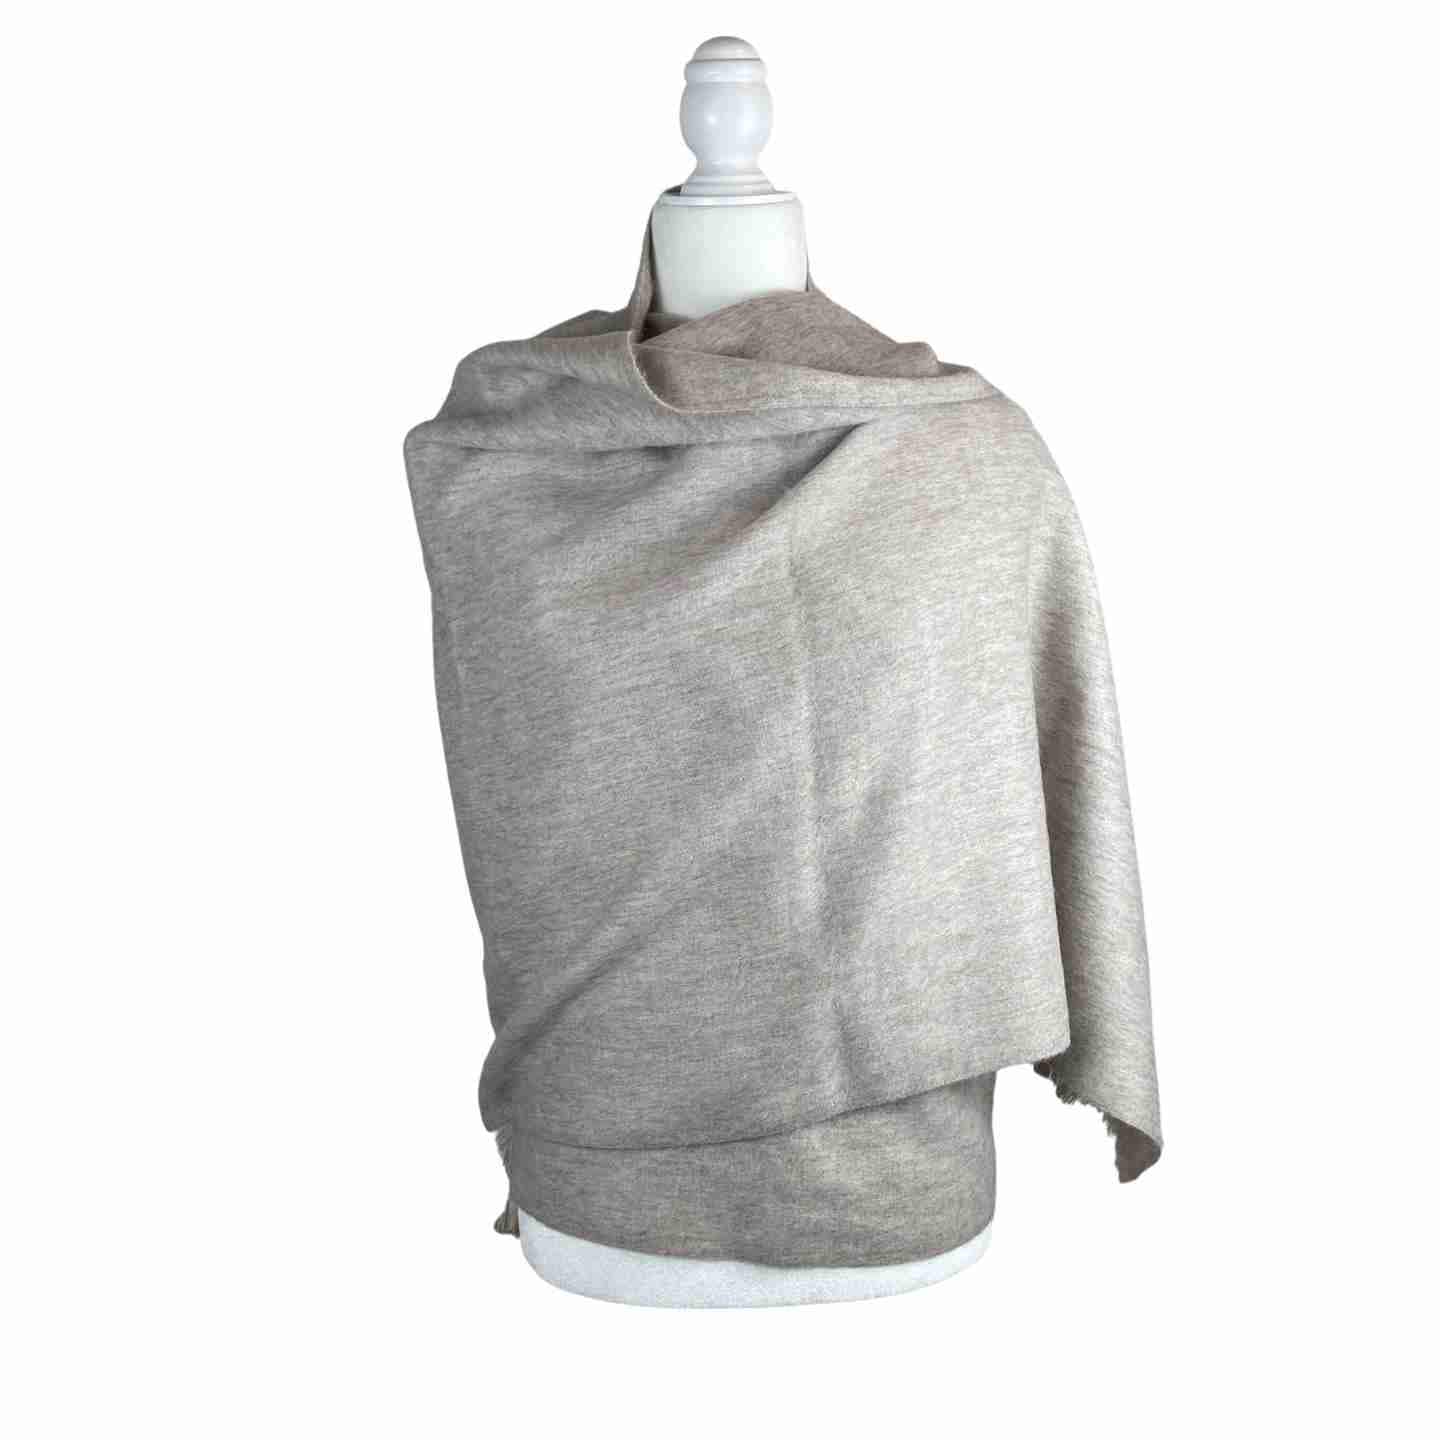 Soft and Warm Shoulder Shawl Wrap | Light Hazelnut